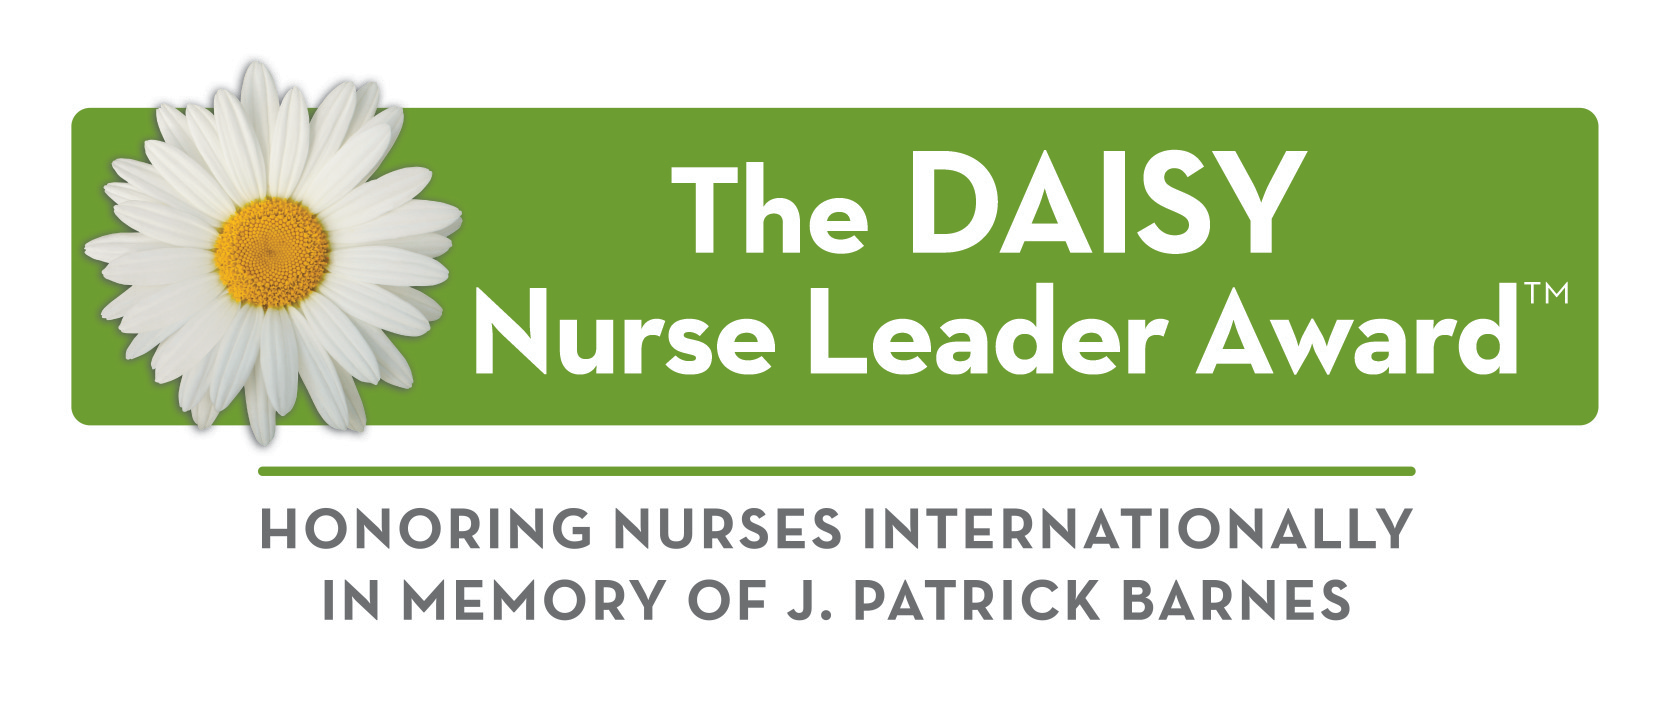 The DAISY Nurse Leader Award logo - Honoring nurses internationally in memory of J. Patrick Barnes.